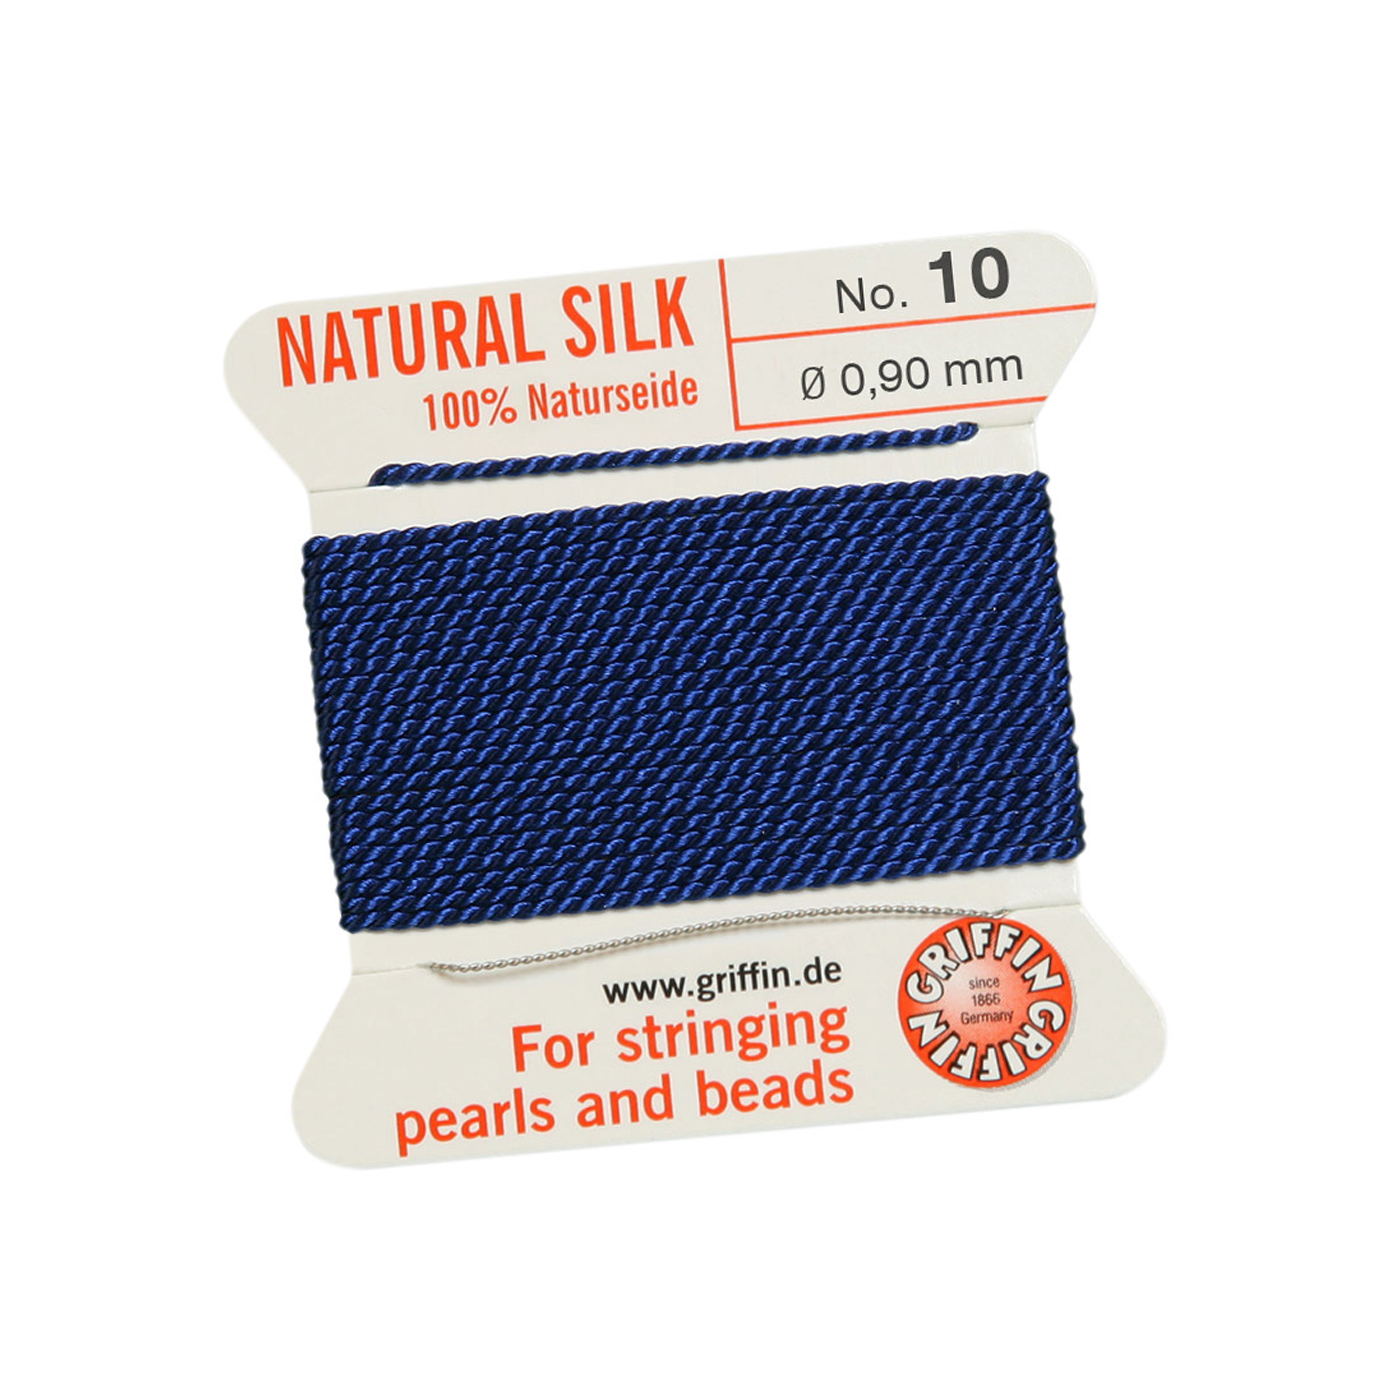 Bead Cord 100% Natural Silk, Dark Blue, No. 10 - 2 m